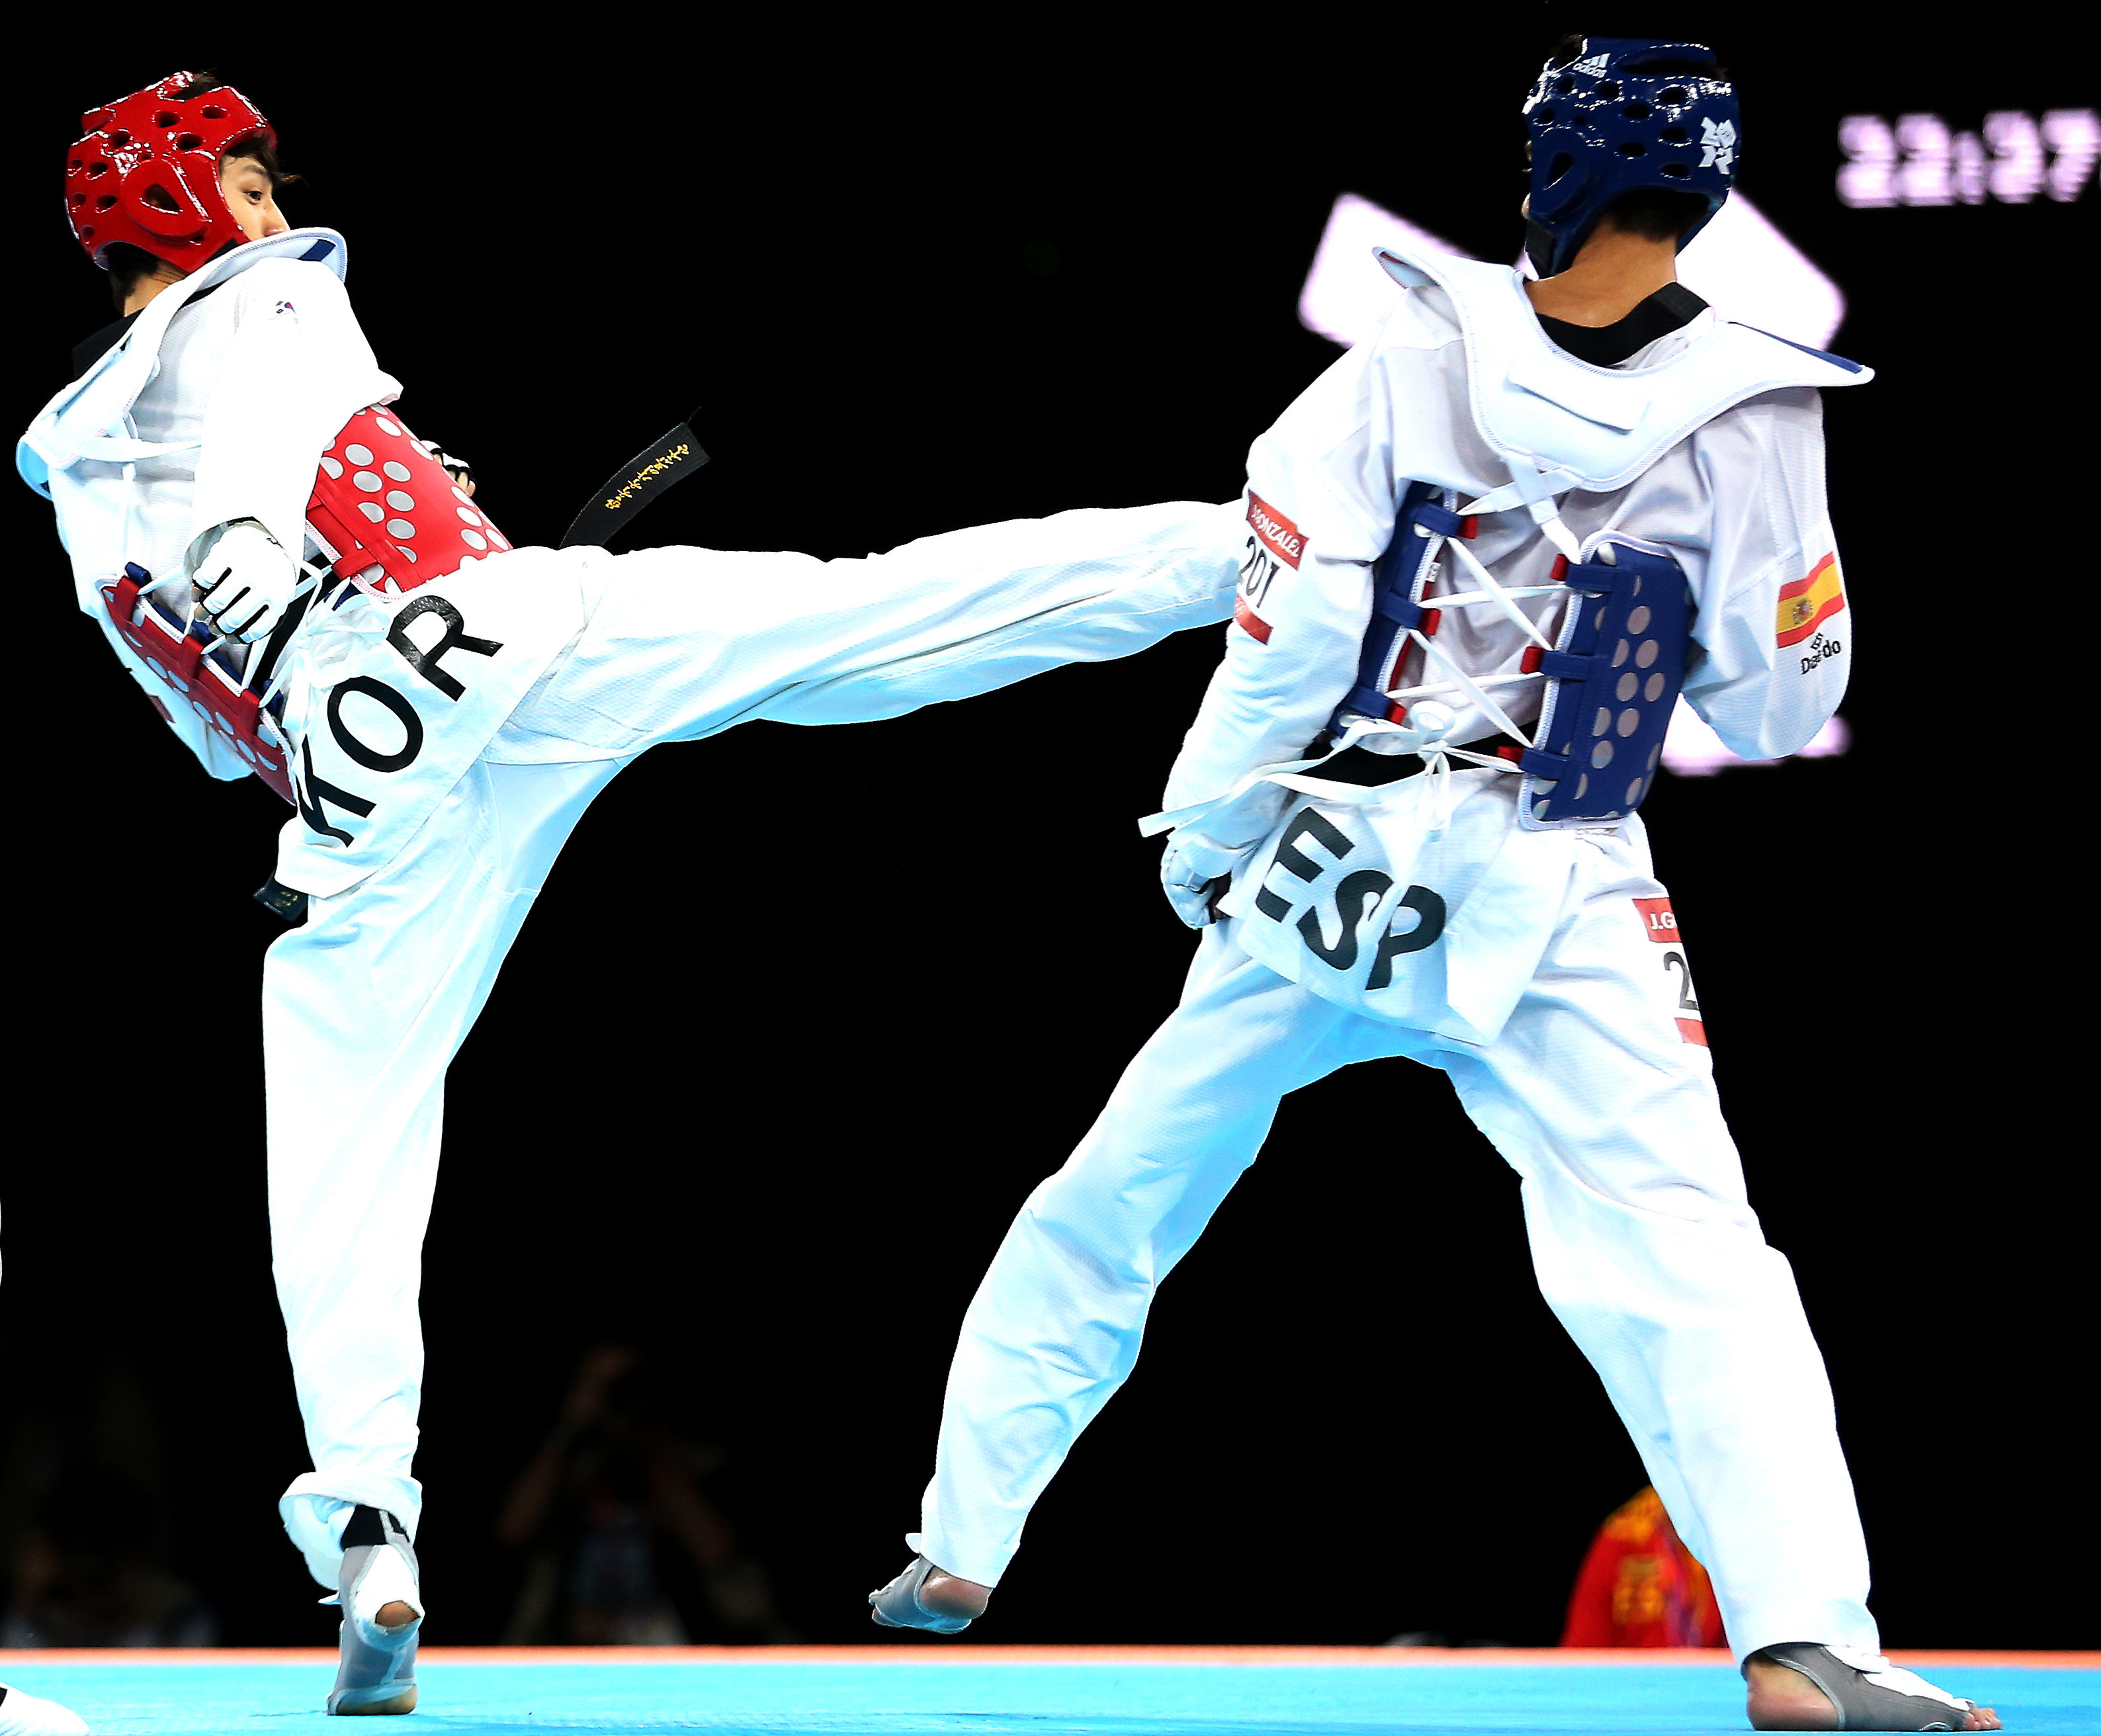 Taekwondo Wallpapers - WallpaperSafari